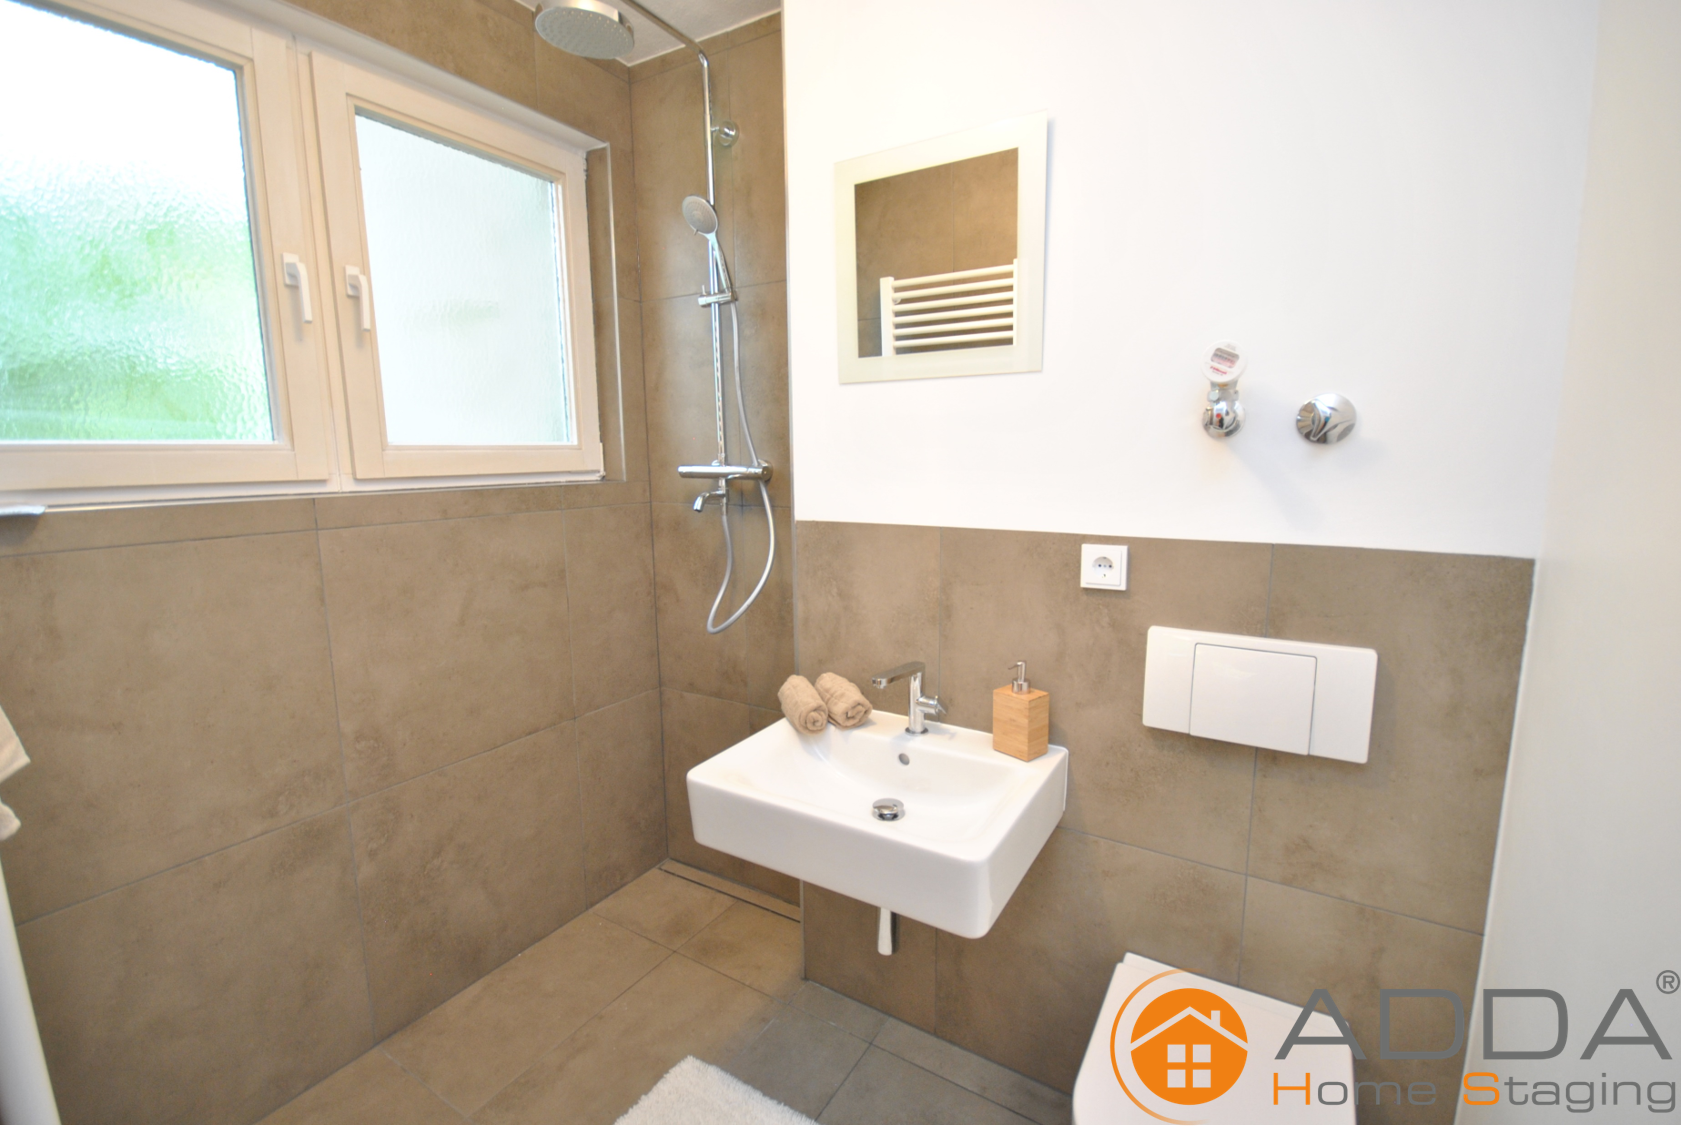 Badezimmer nach ADDA Homestaging #badezimmer #raumgestaltung ©ADDA Homestaging